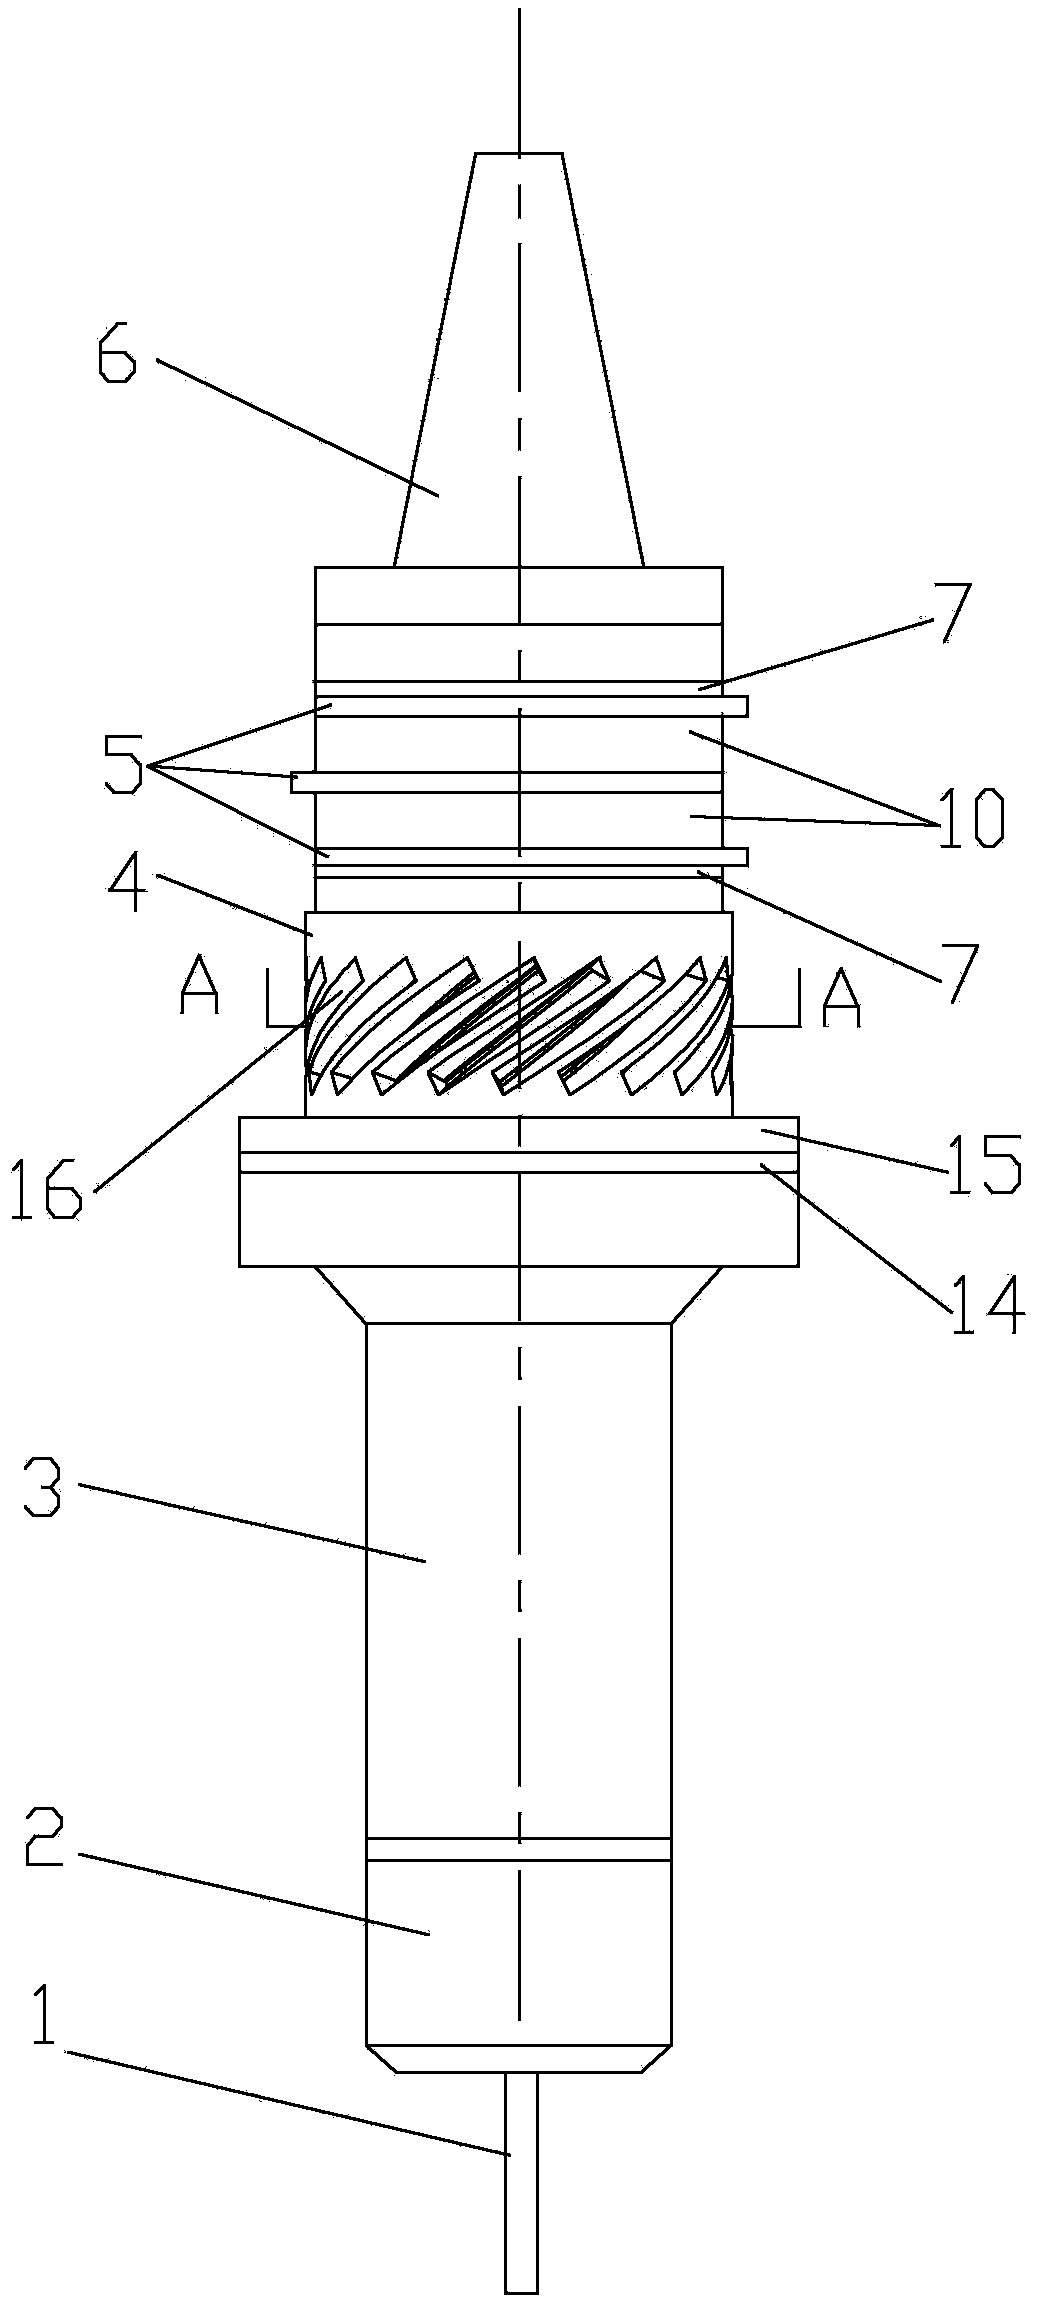 A Longitudinal-Torsion Compound Ultrasonic Vibration Cutting Device